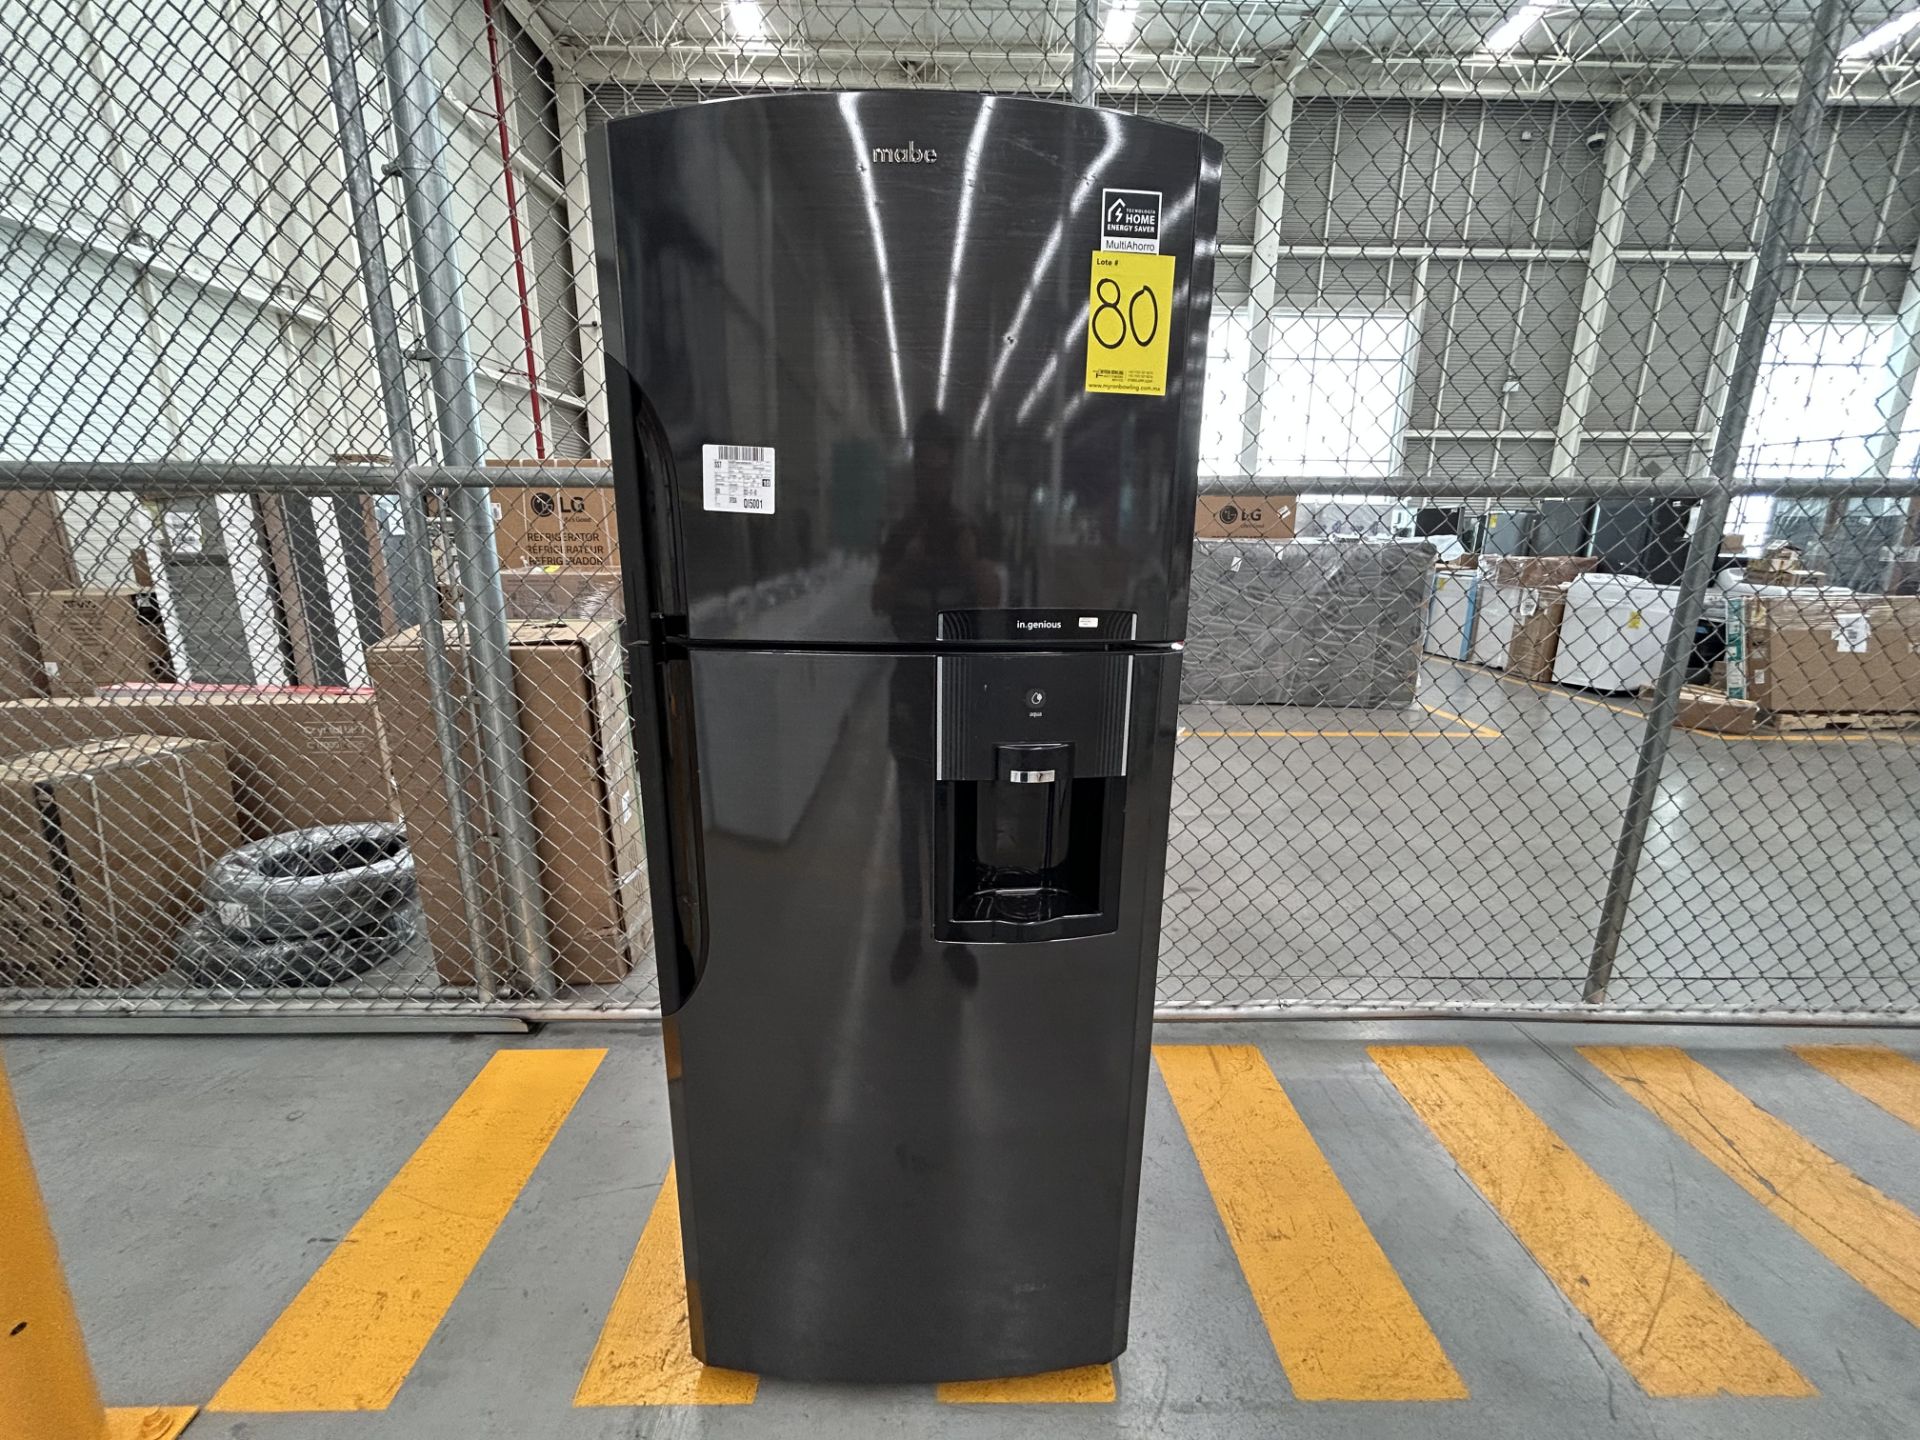 Lote de 1 Refrigerador con dispensador de agua Marca MABE, Modelo RMS510IARMP0, Serie 00282, Color